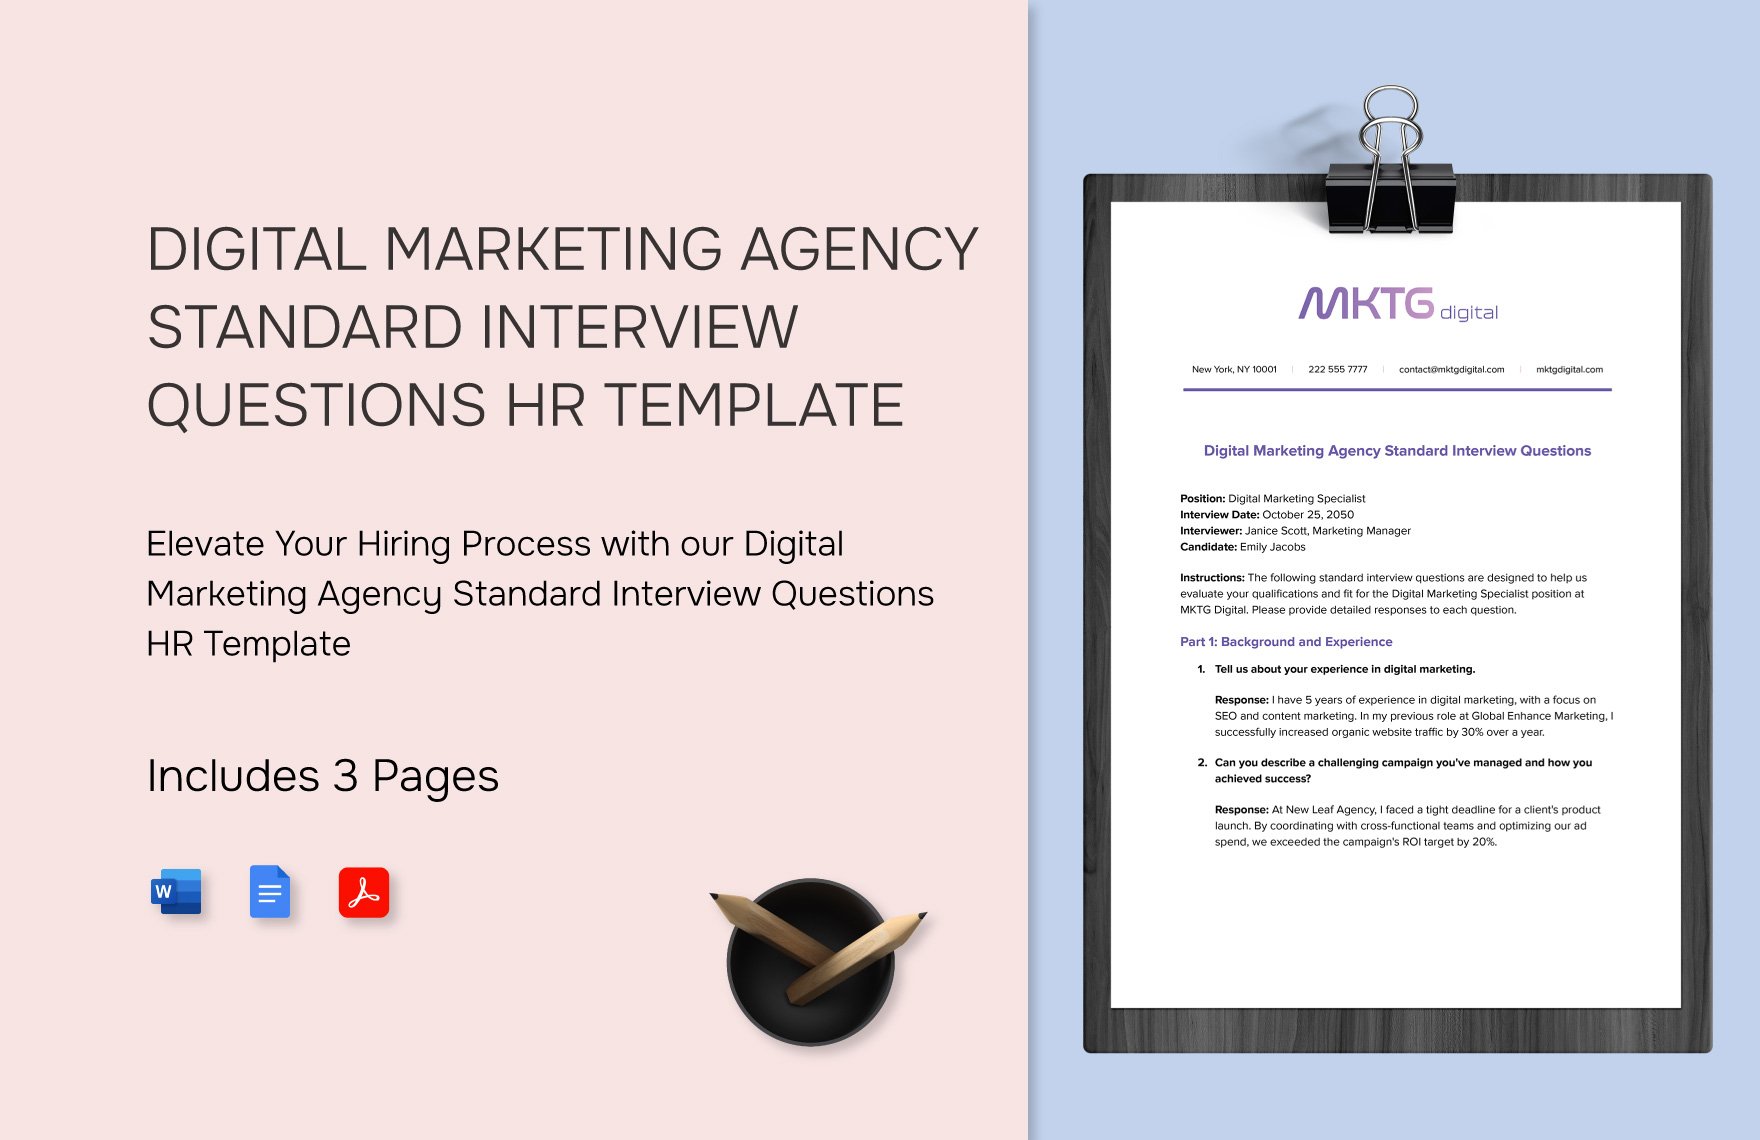 Digital Marketing Agency Standard Interview Questions HR Template